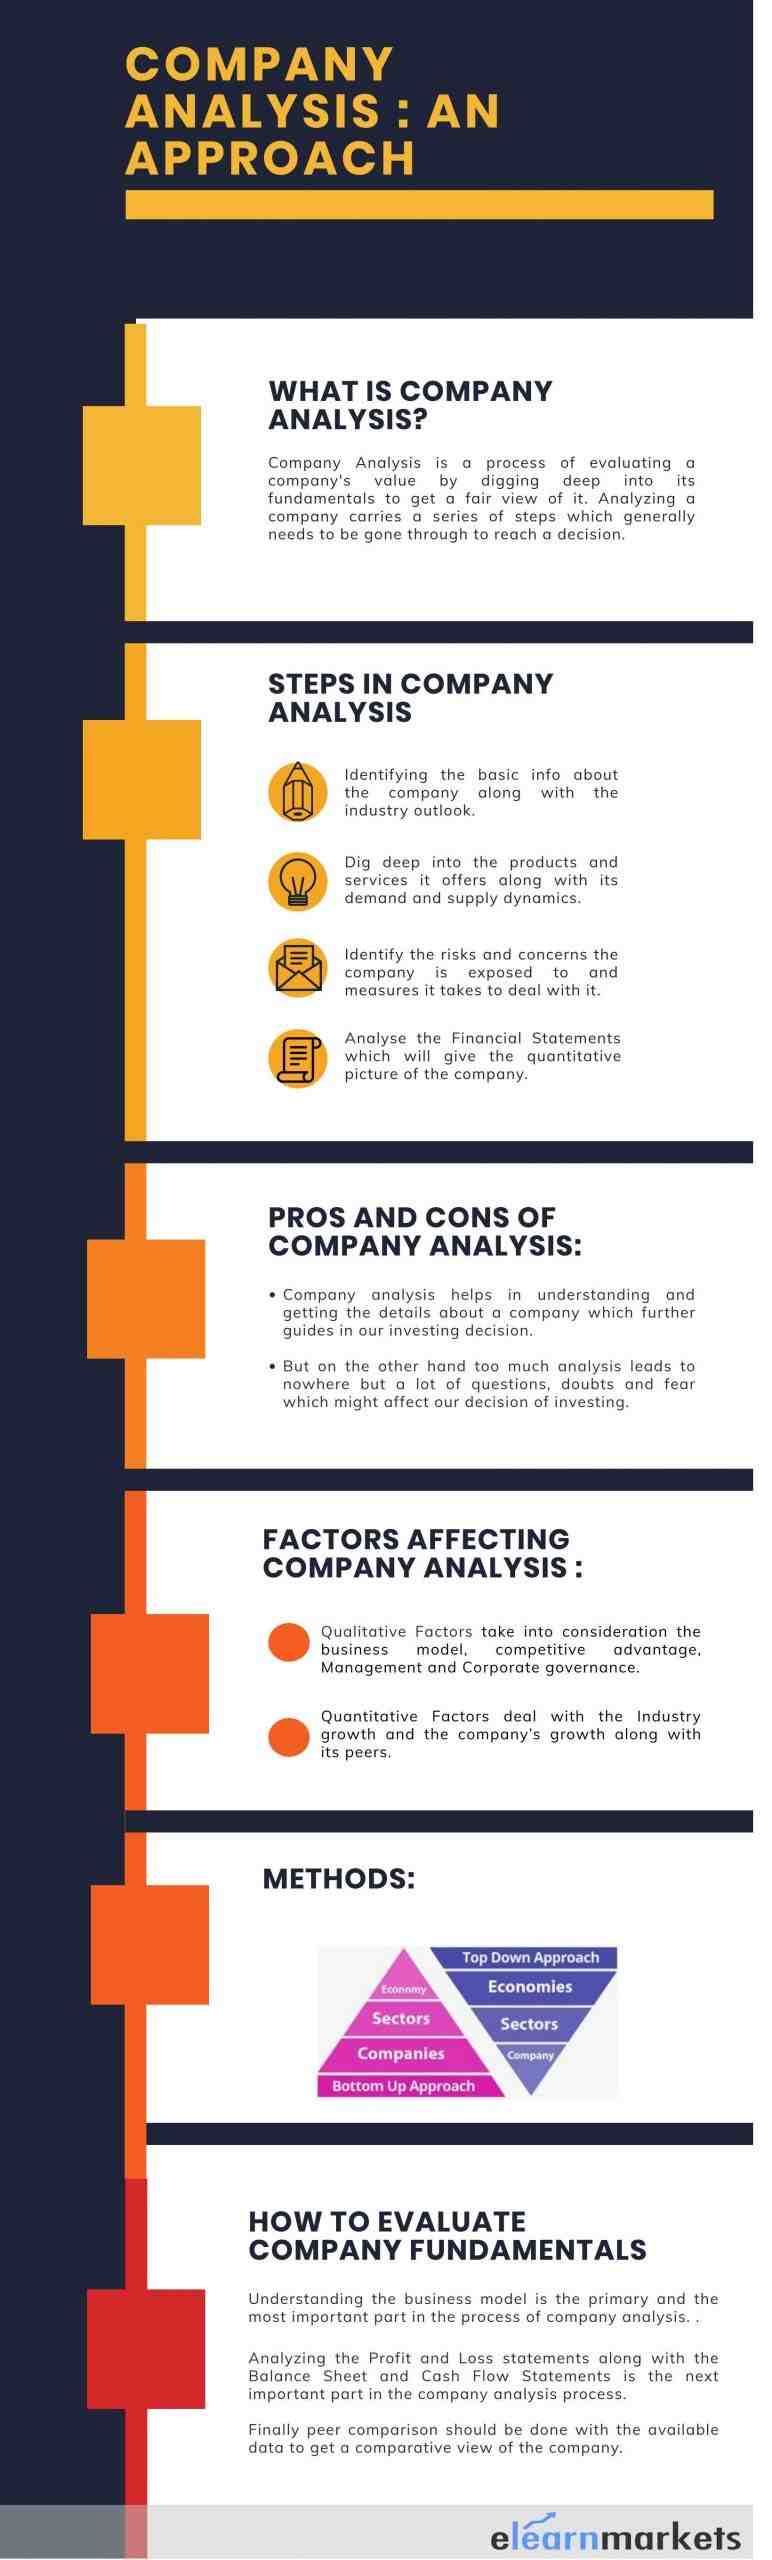 Company Analysis: How do Investors evaluate a company? 2